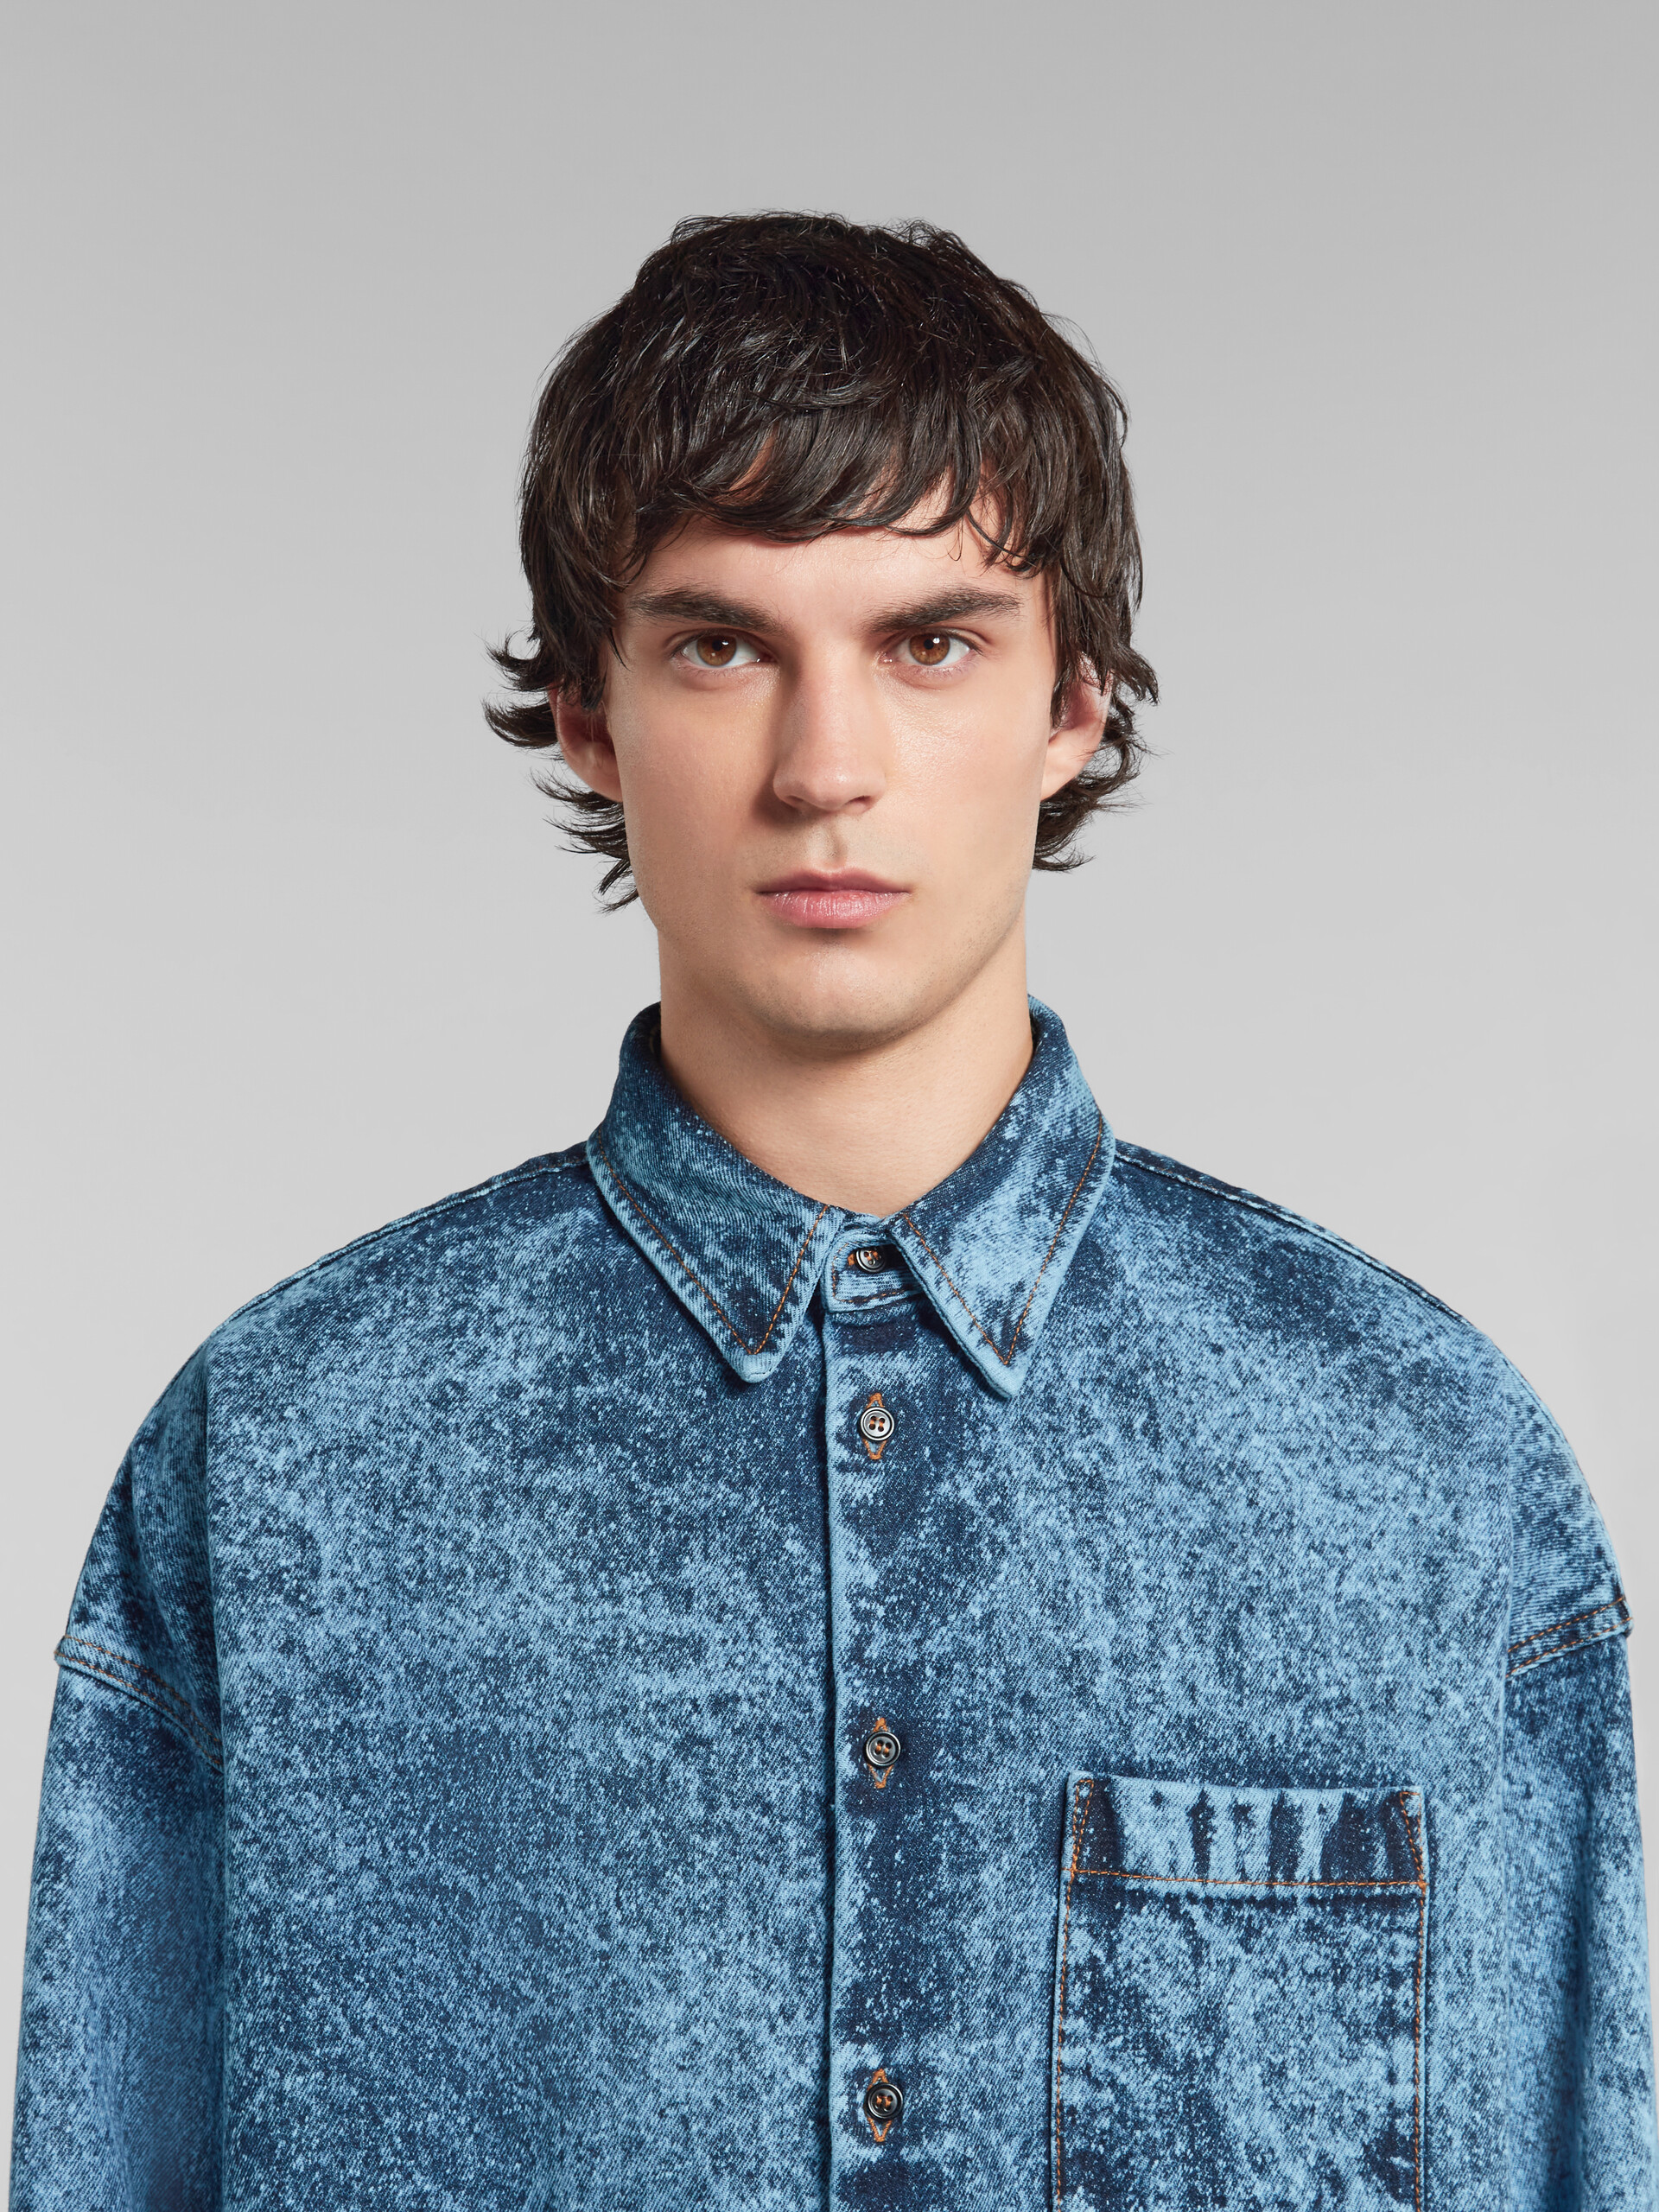 Blaues Jeanshemd mit marmoriertem Muster - Hemden - Image 4